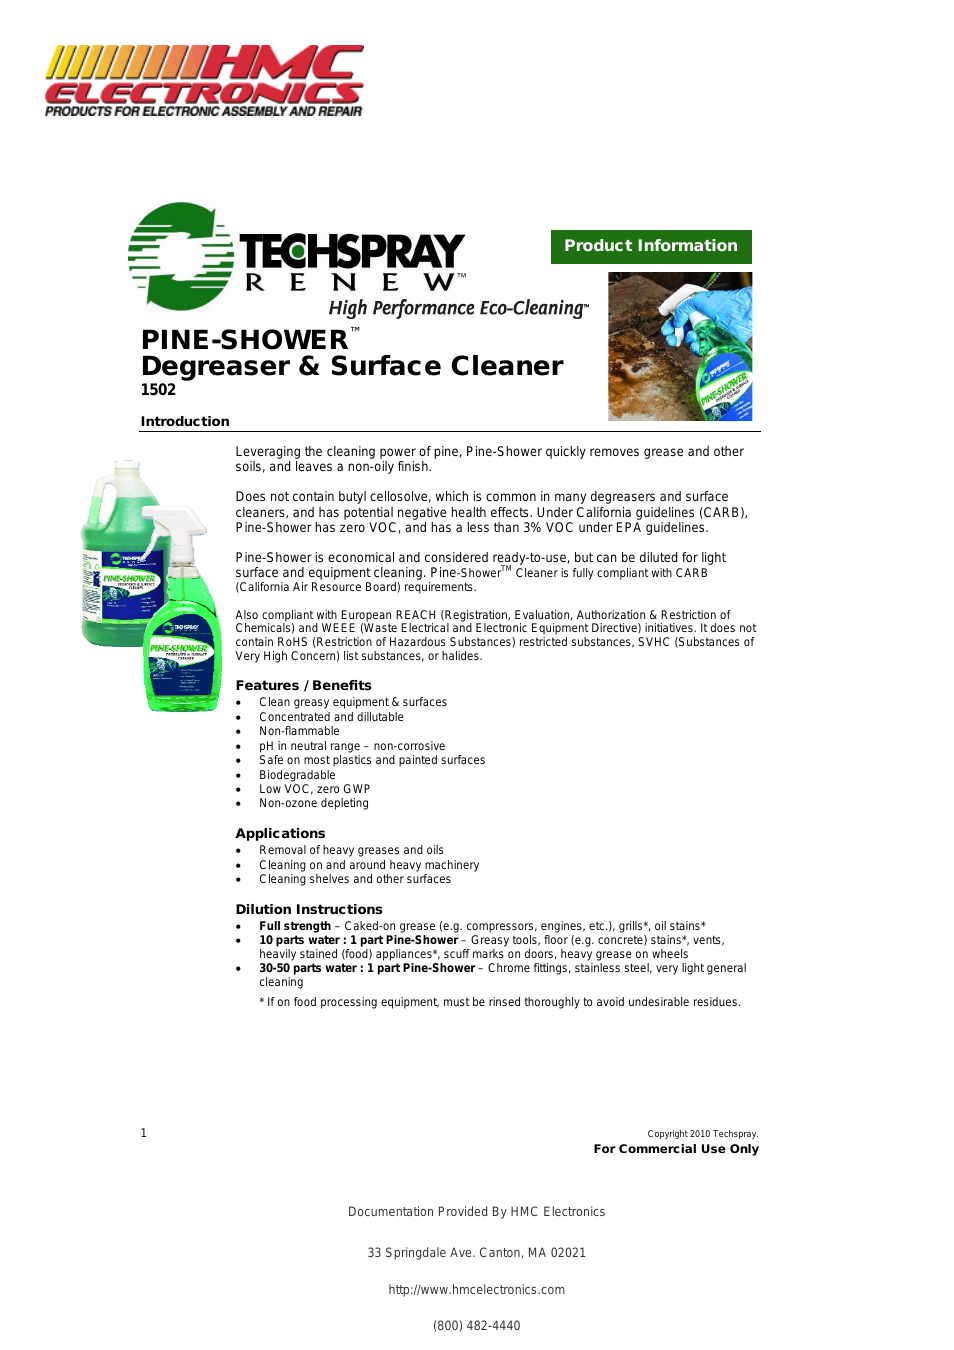 1502QT Techspray 1502-QT Pine-Shower Degreaser & Surface Cleaner